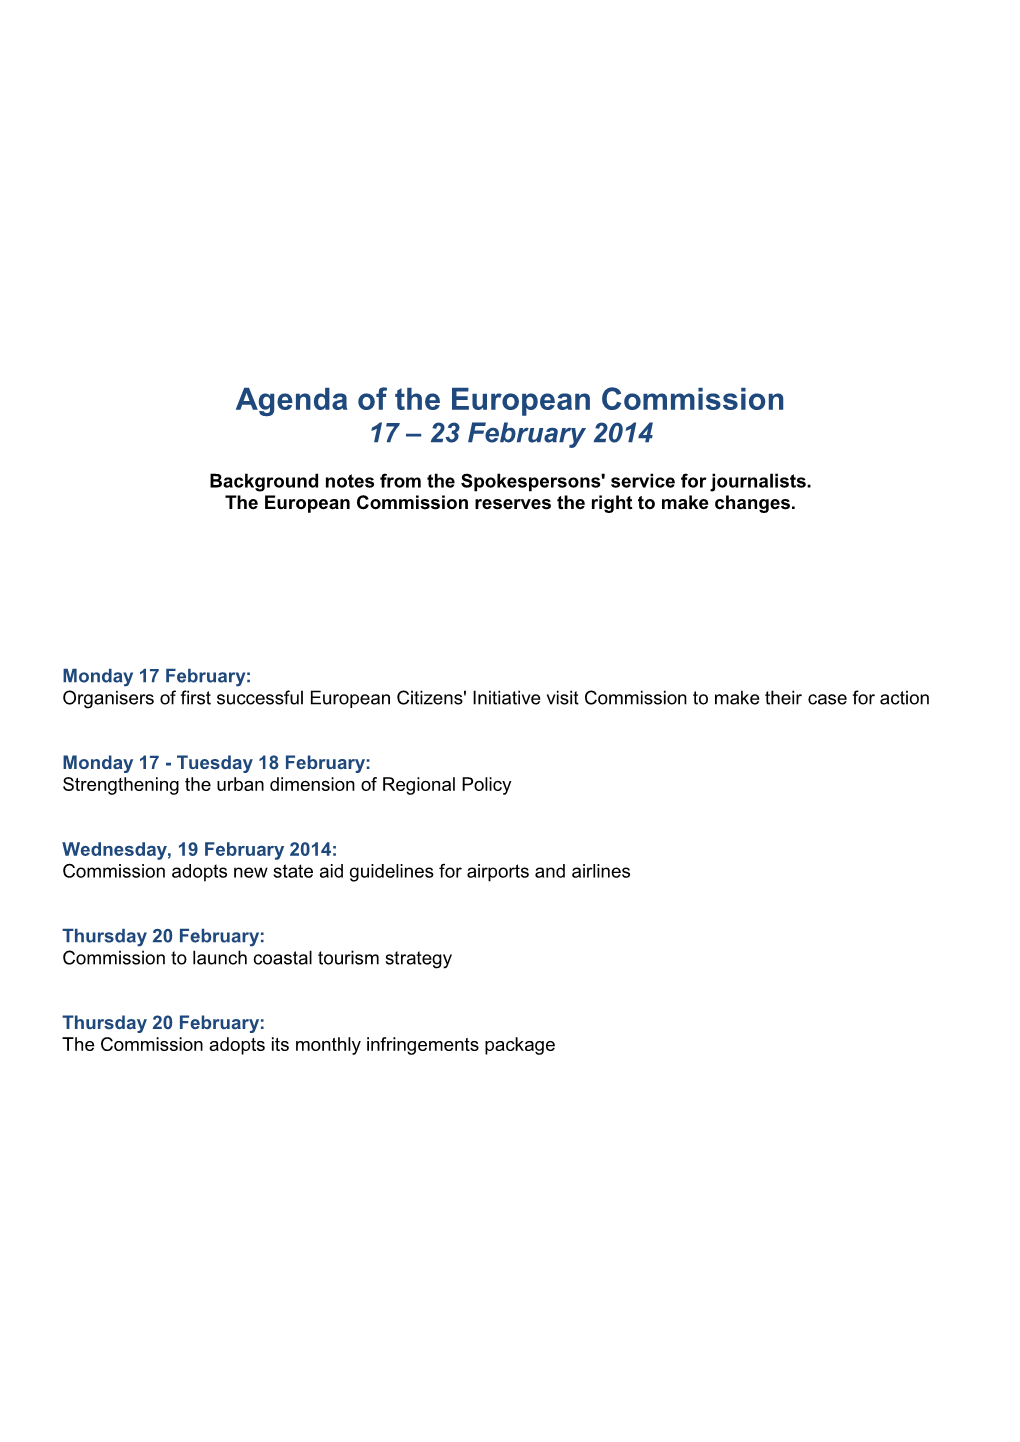 Agenda of the European Commission 17 – 23 February 2014